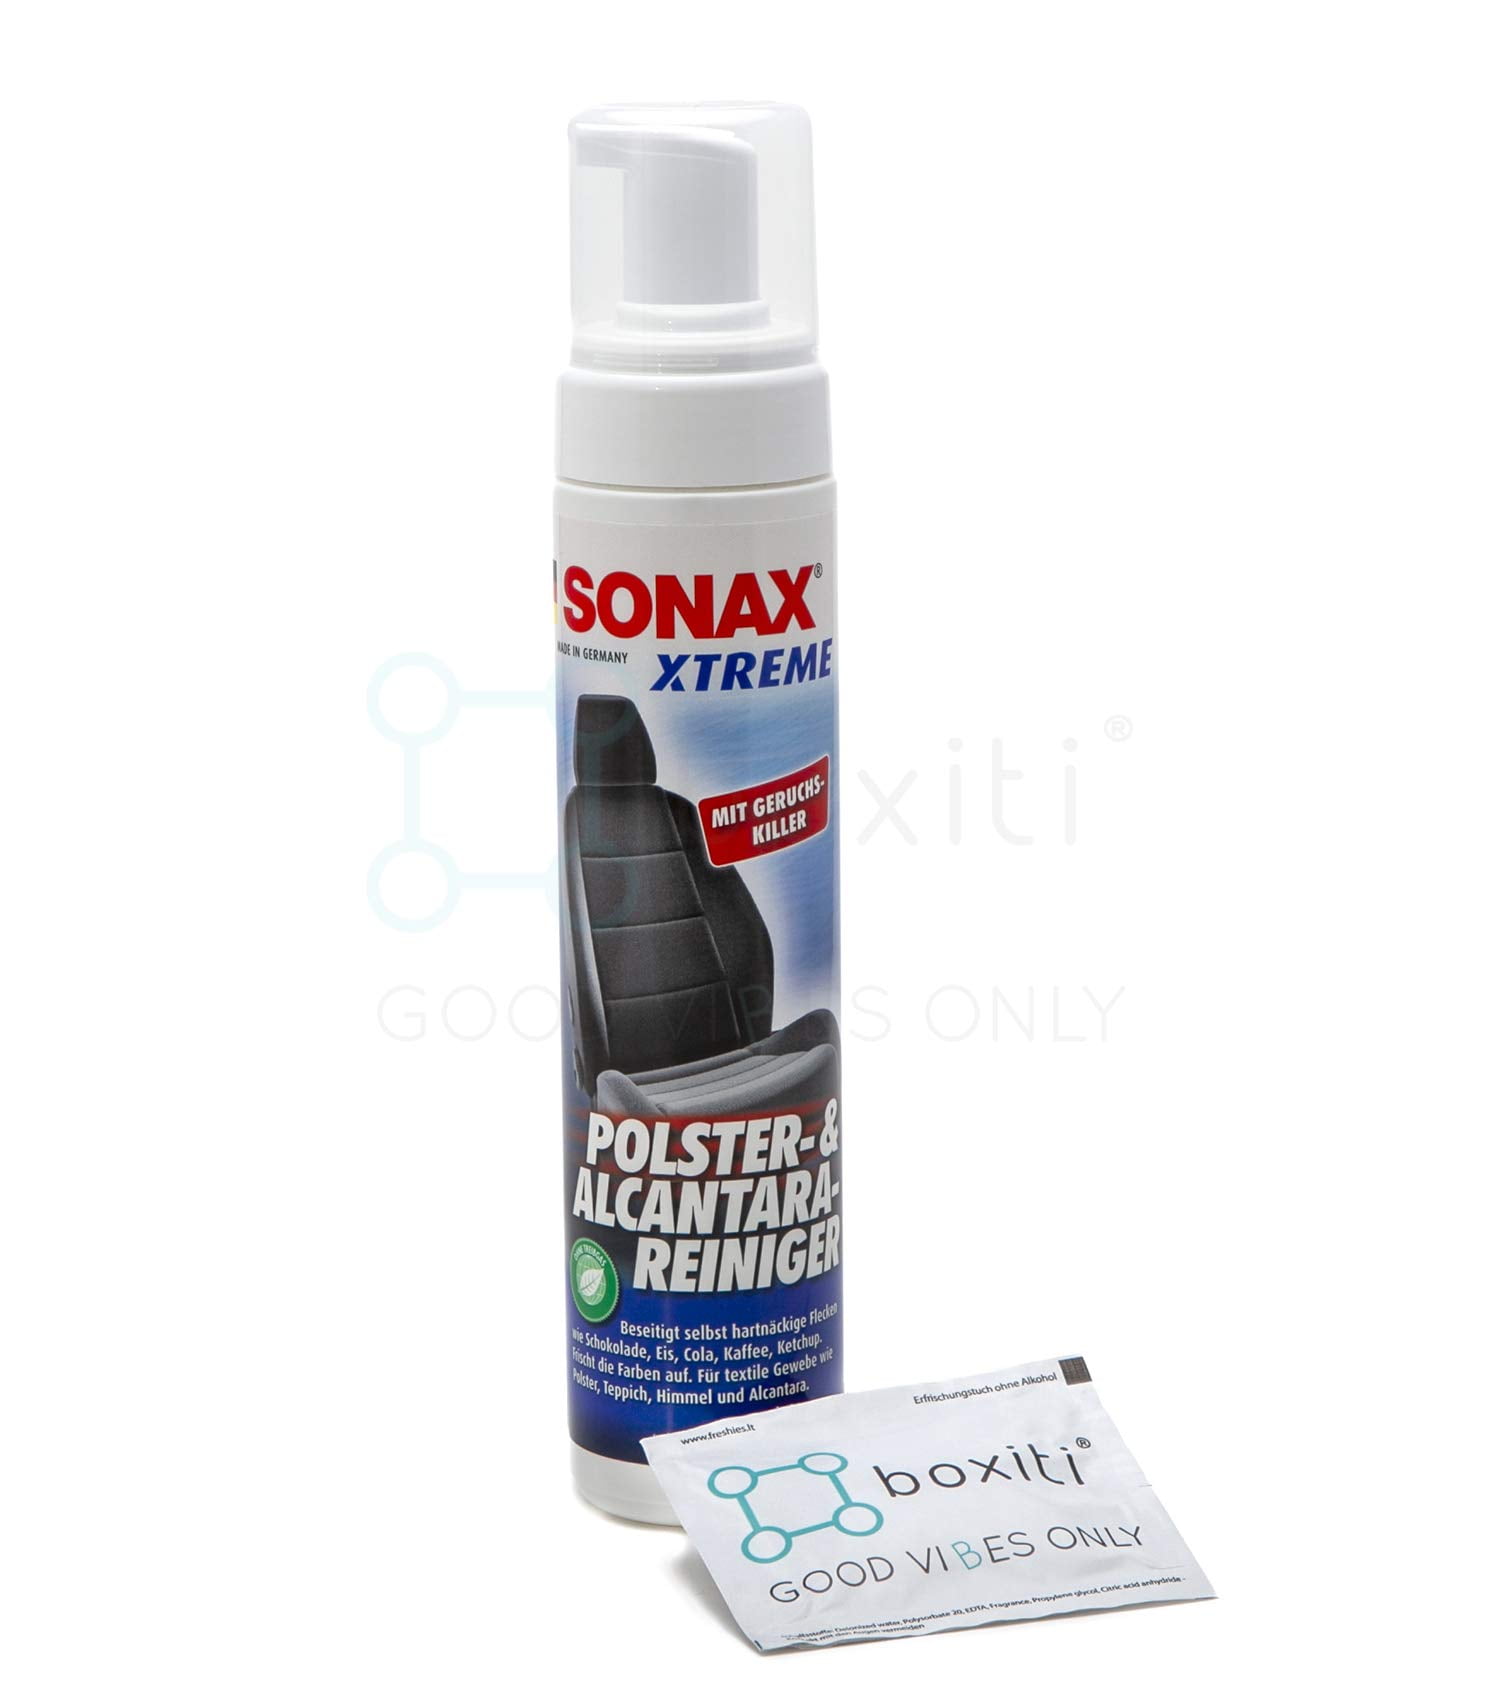 SONAX (206141) Upholstery and Alcantara Cleaner - 8.45 fl. oz.